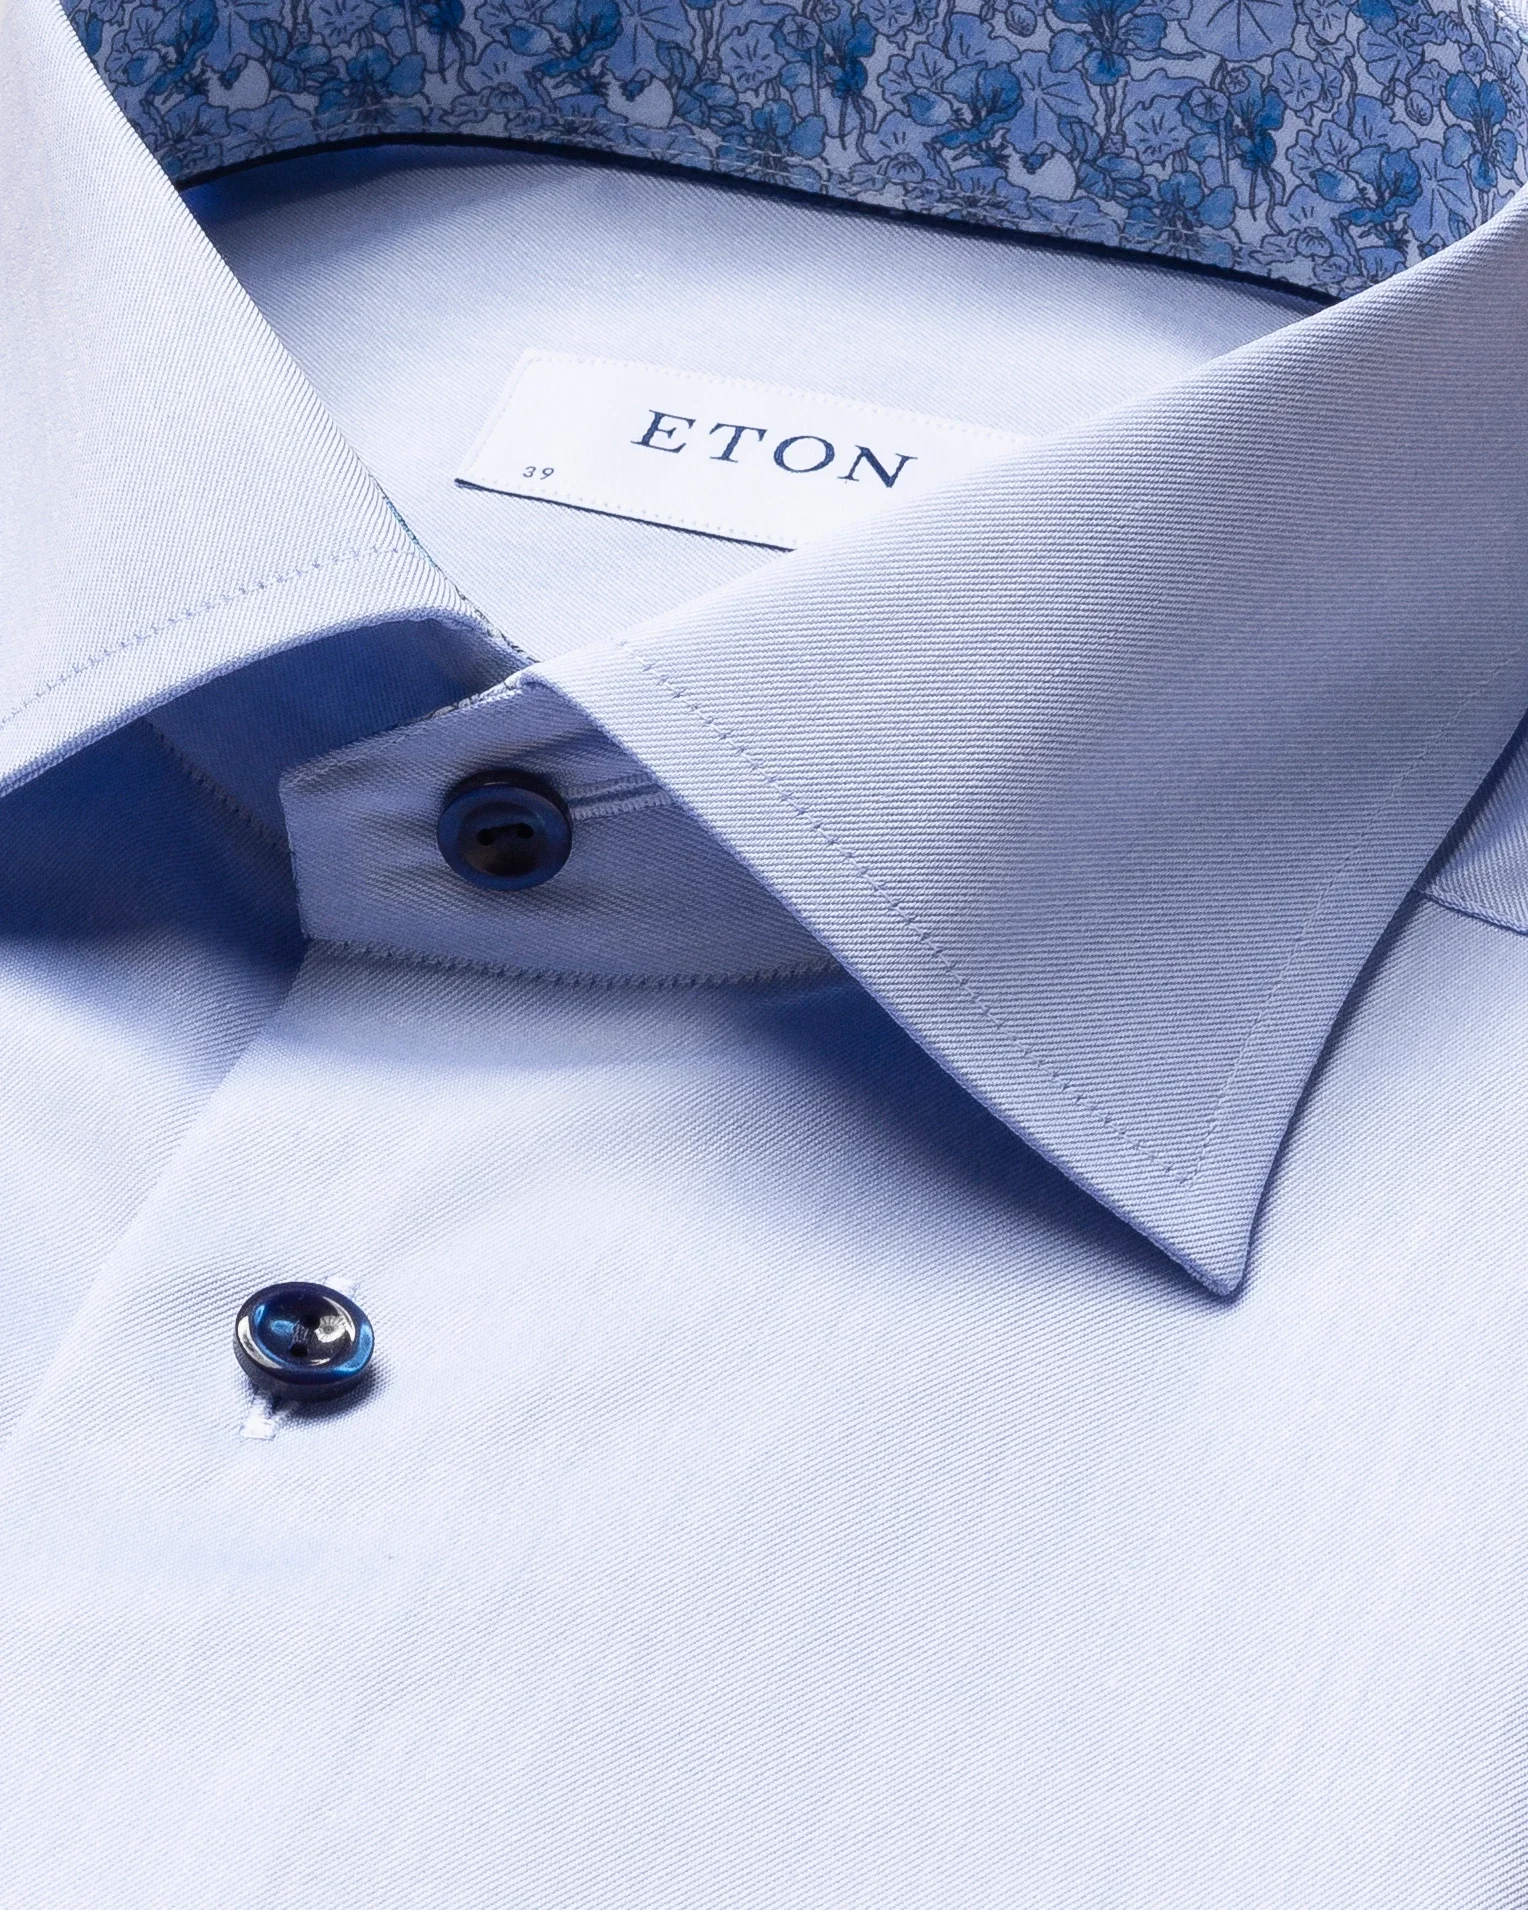 Eton - blue twill shirt blue details cut away